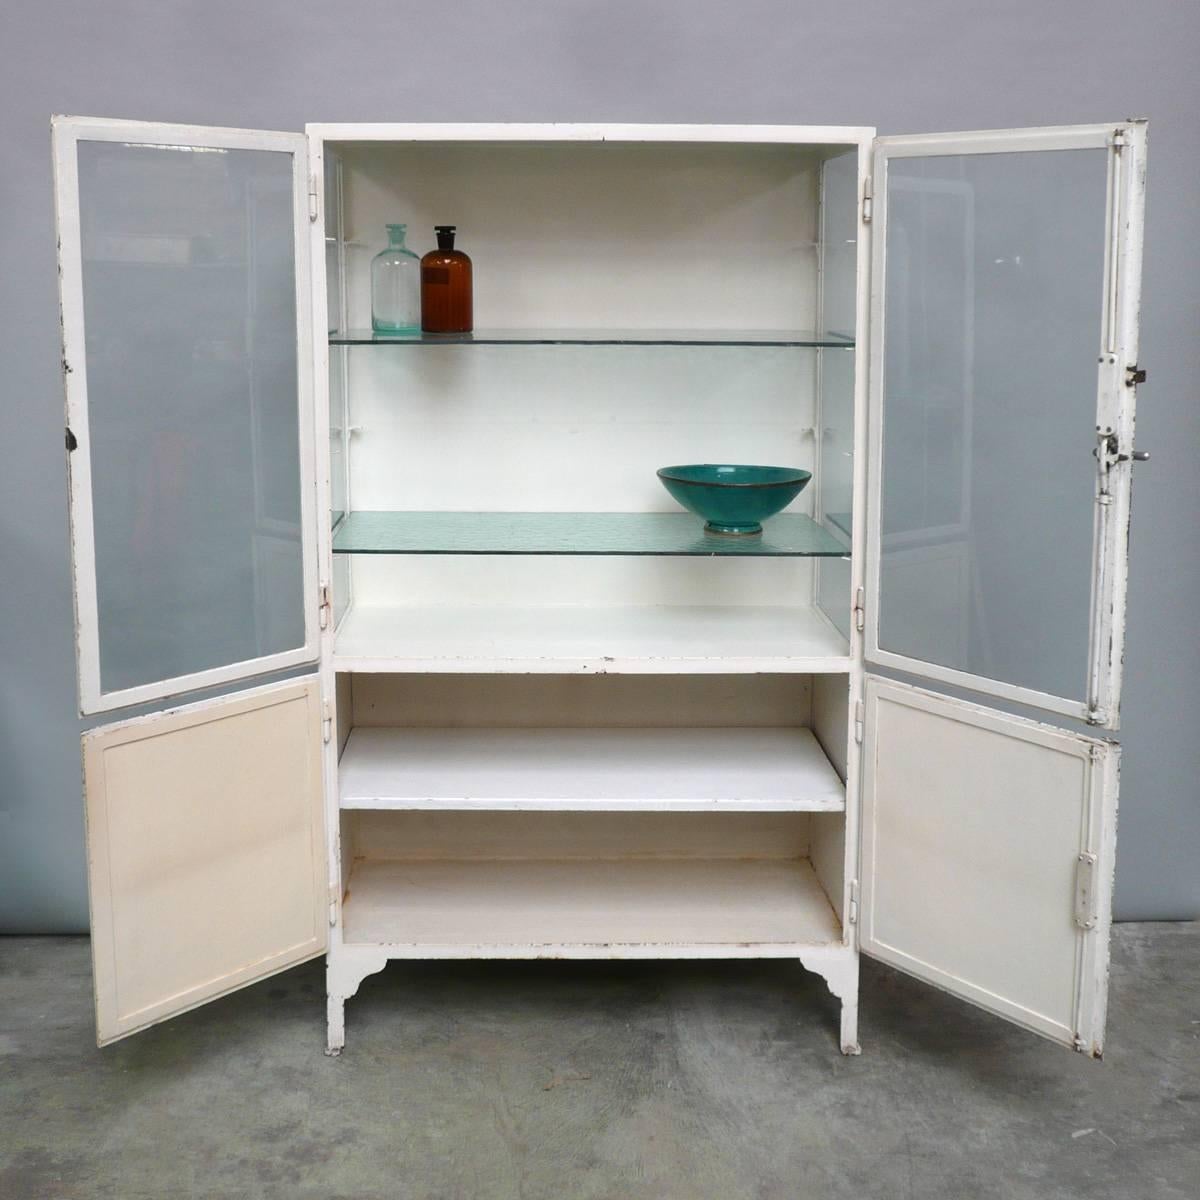 1950s medicine cabinet